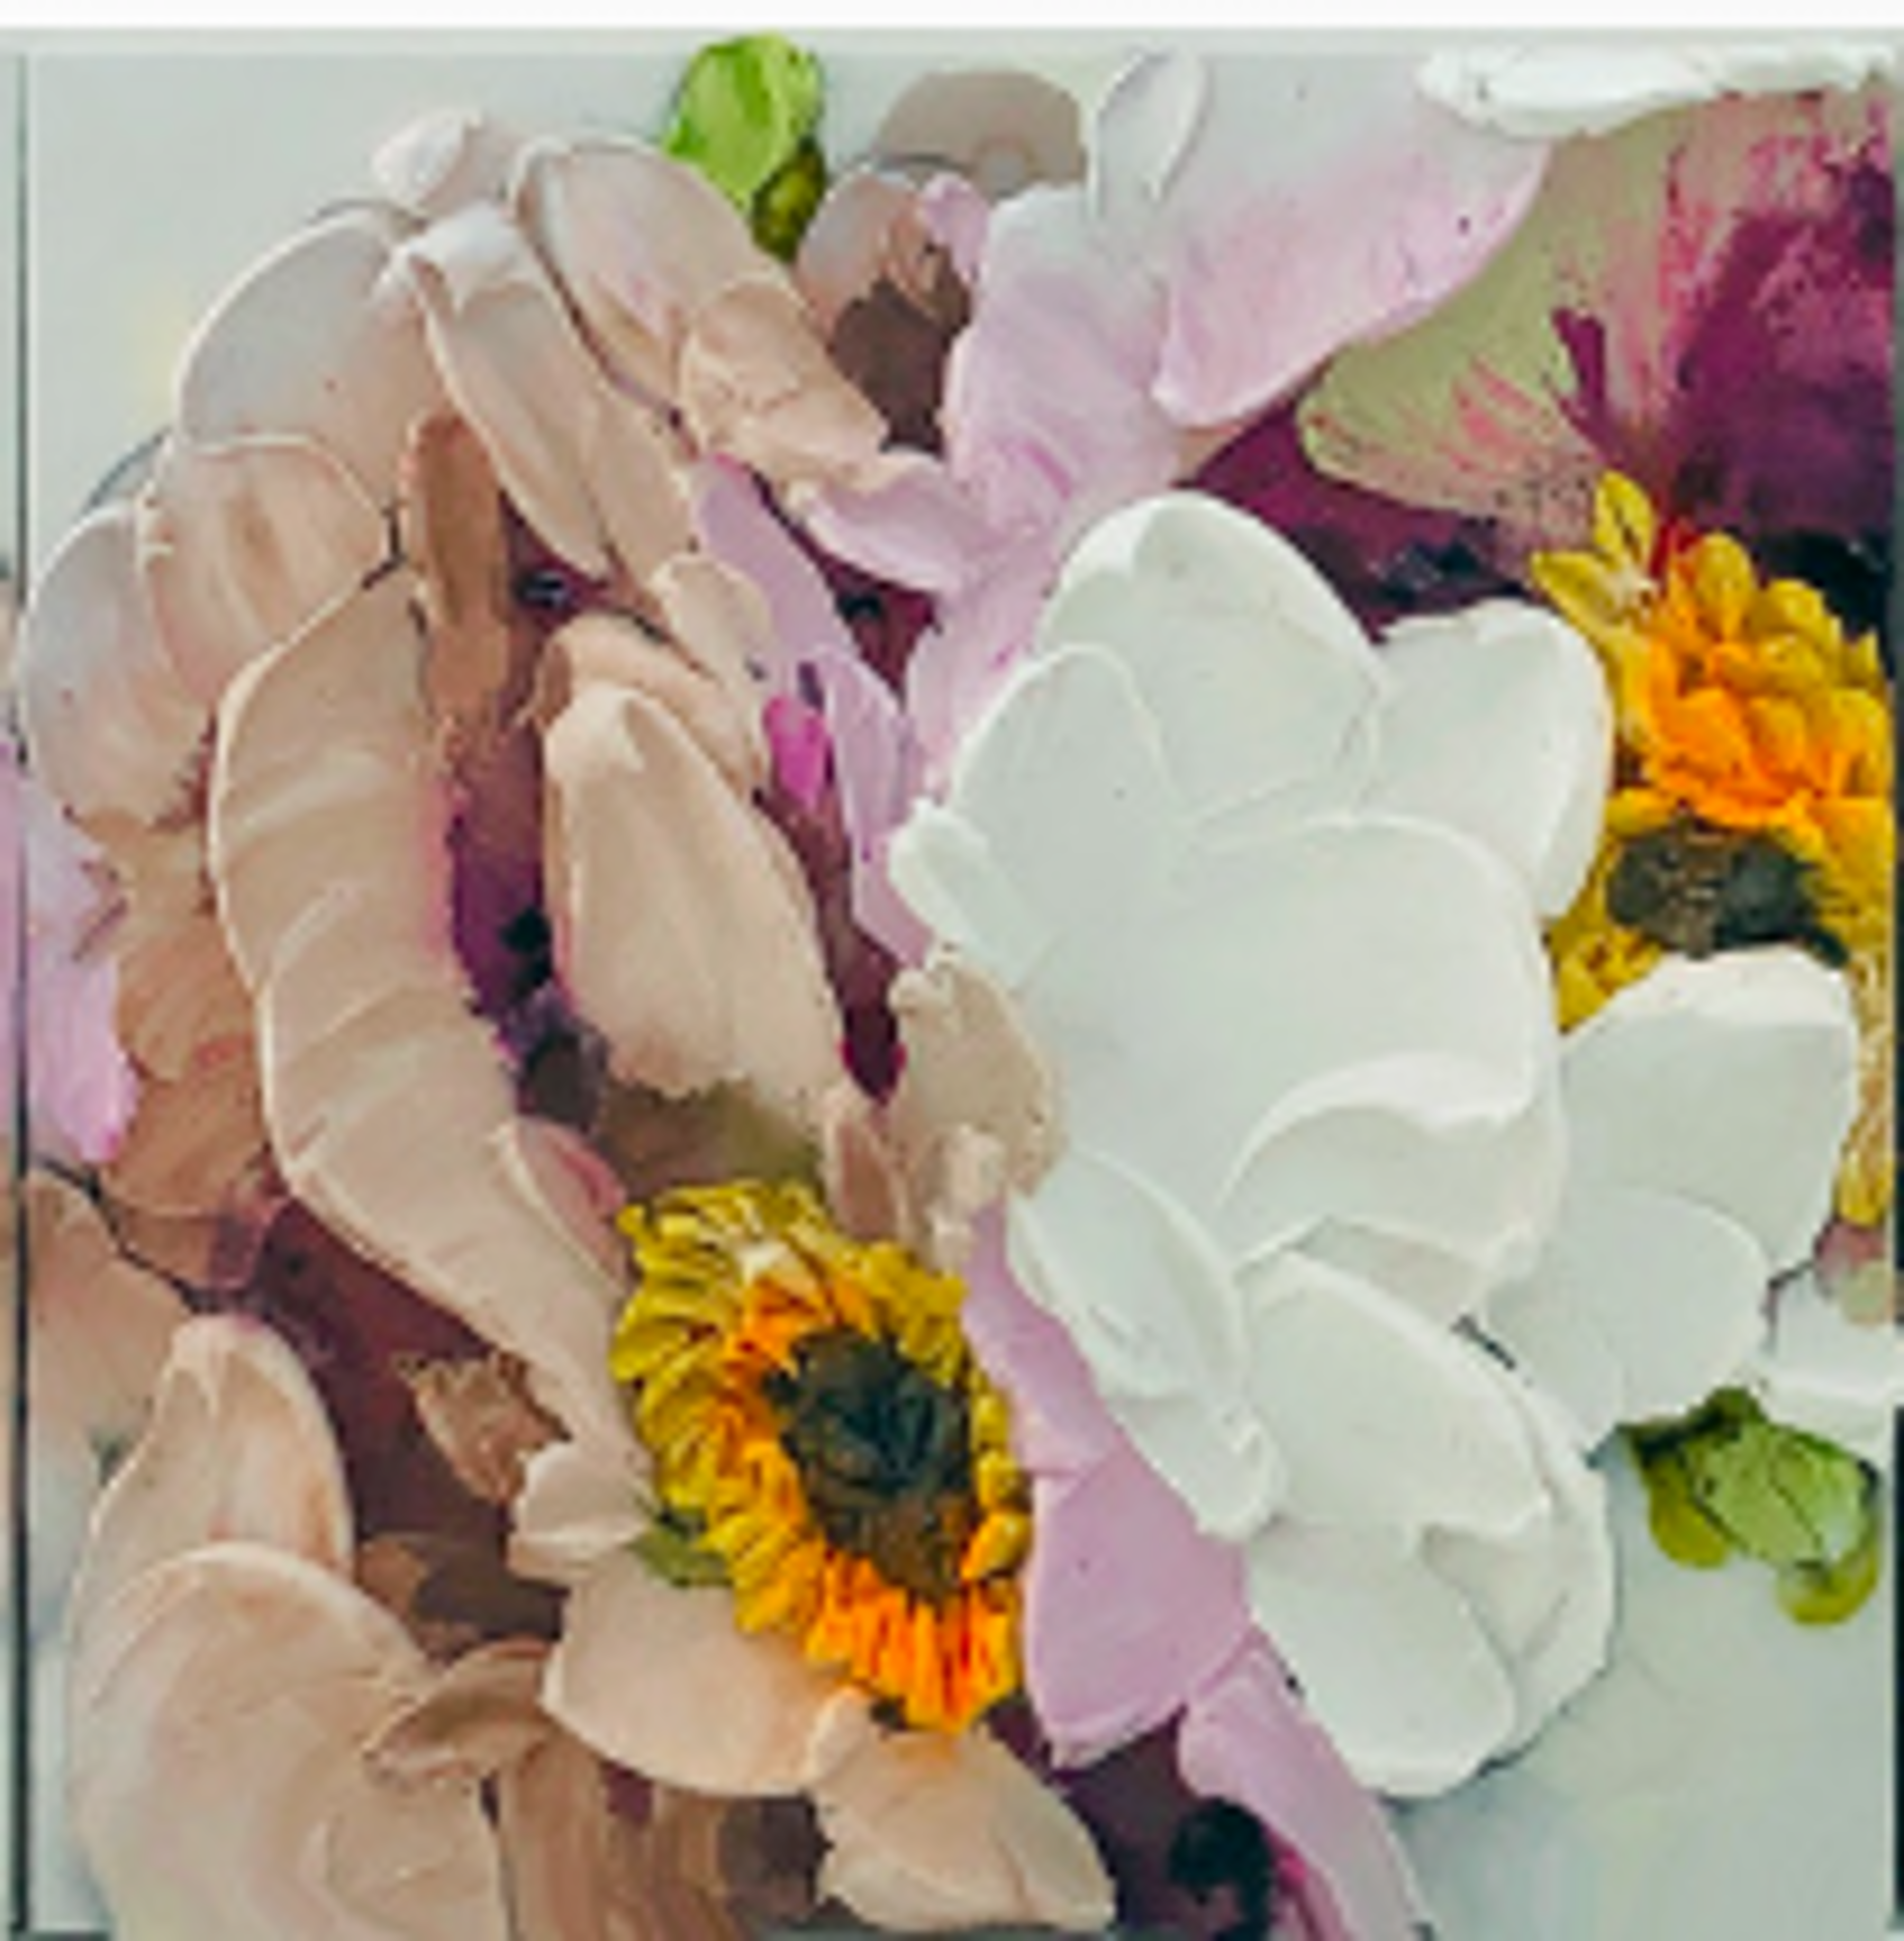 From Flower to Flower  #2 by Nicoletta Belletti